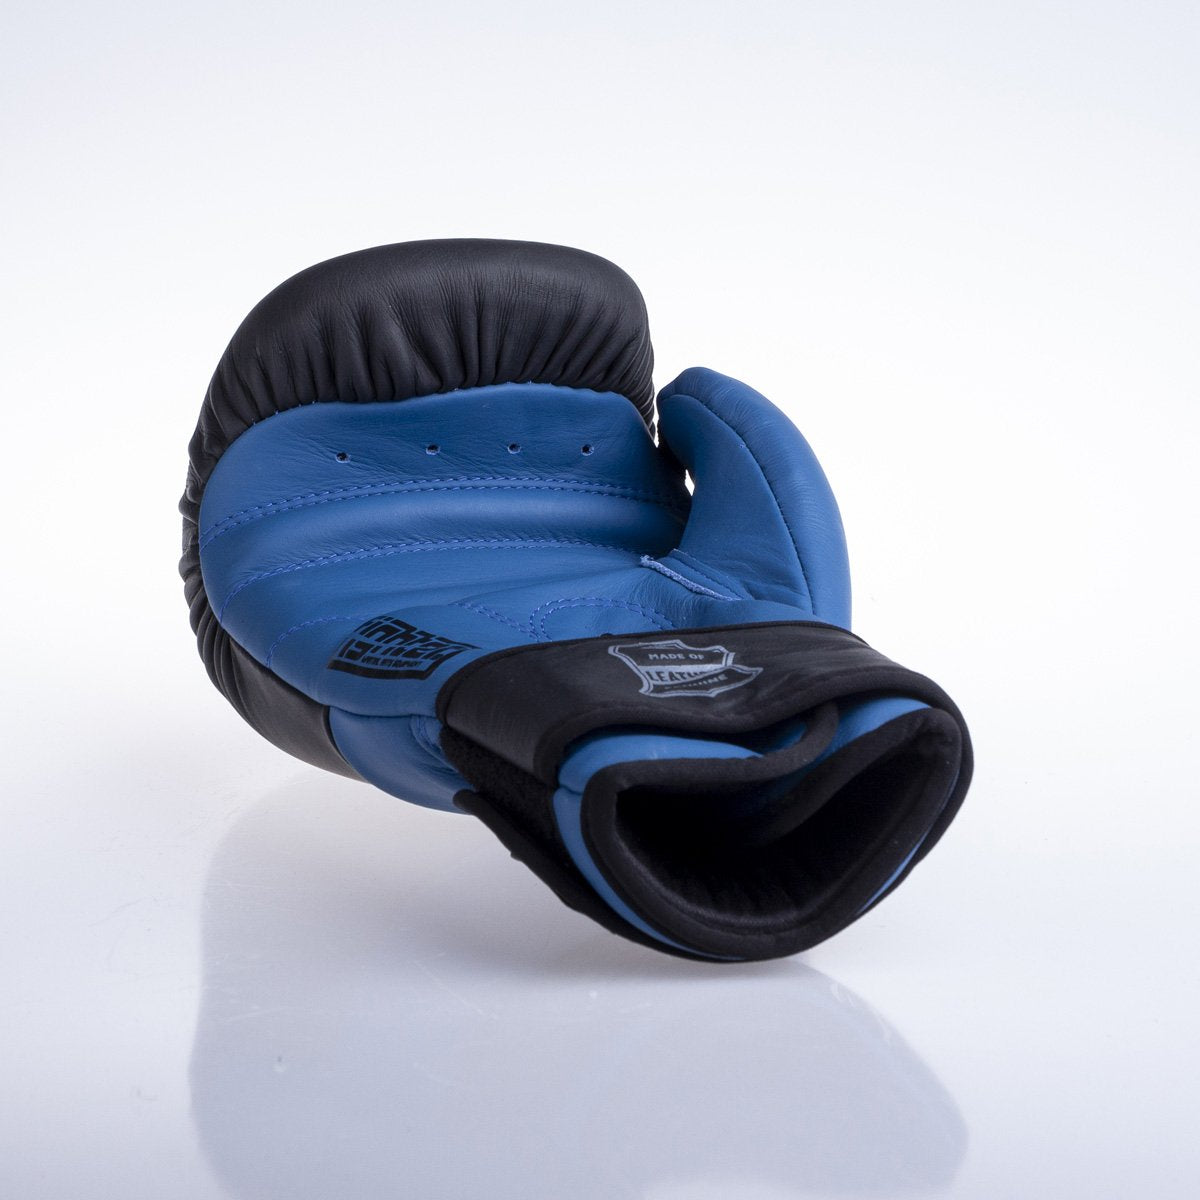 Fighter Boxhandschuhe SPLIT- schwarz/blau